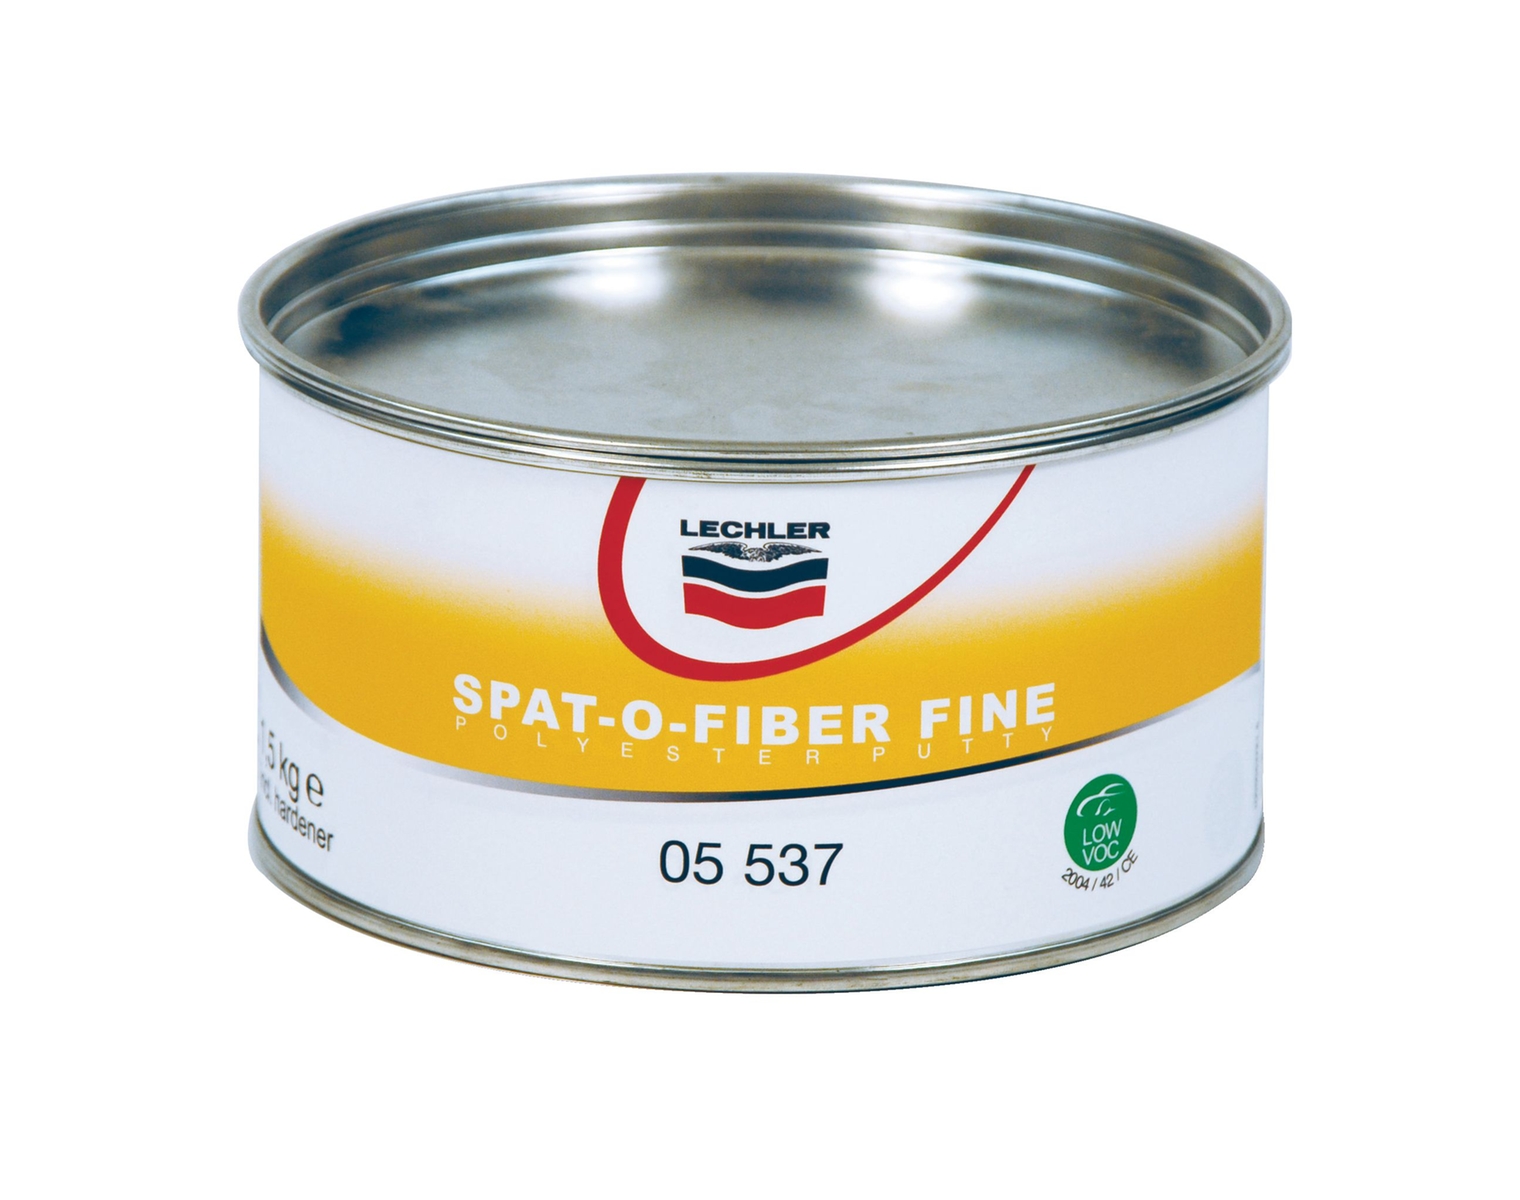 Lechler Spat-O-Fiber fine con induritore, 05537, 1.5 kg